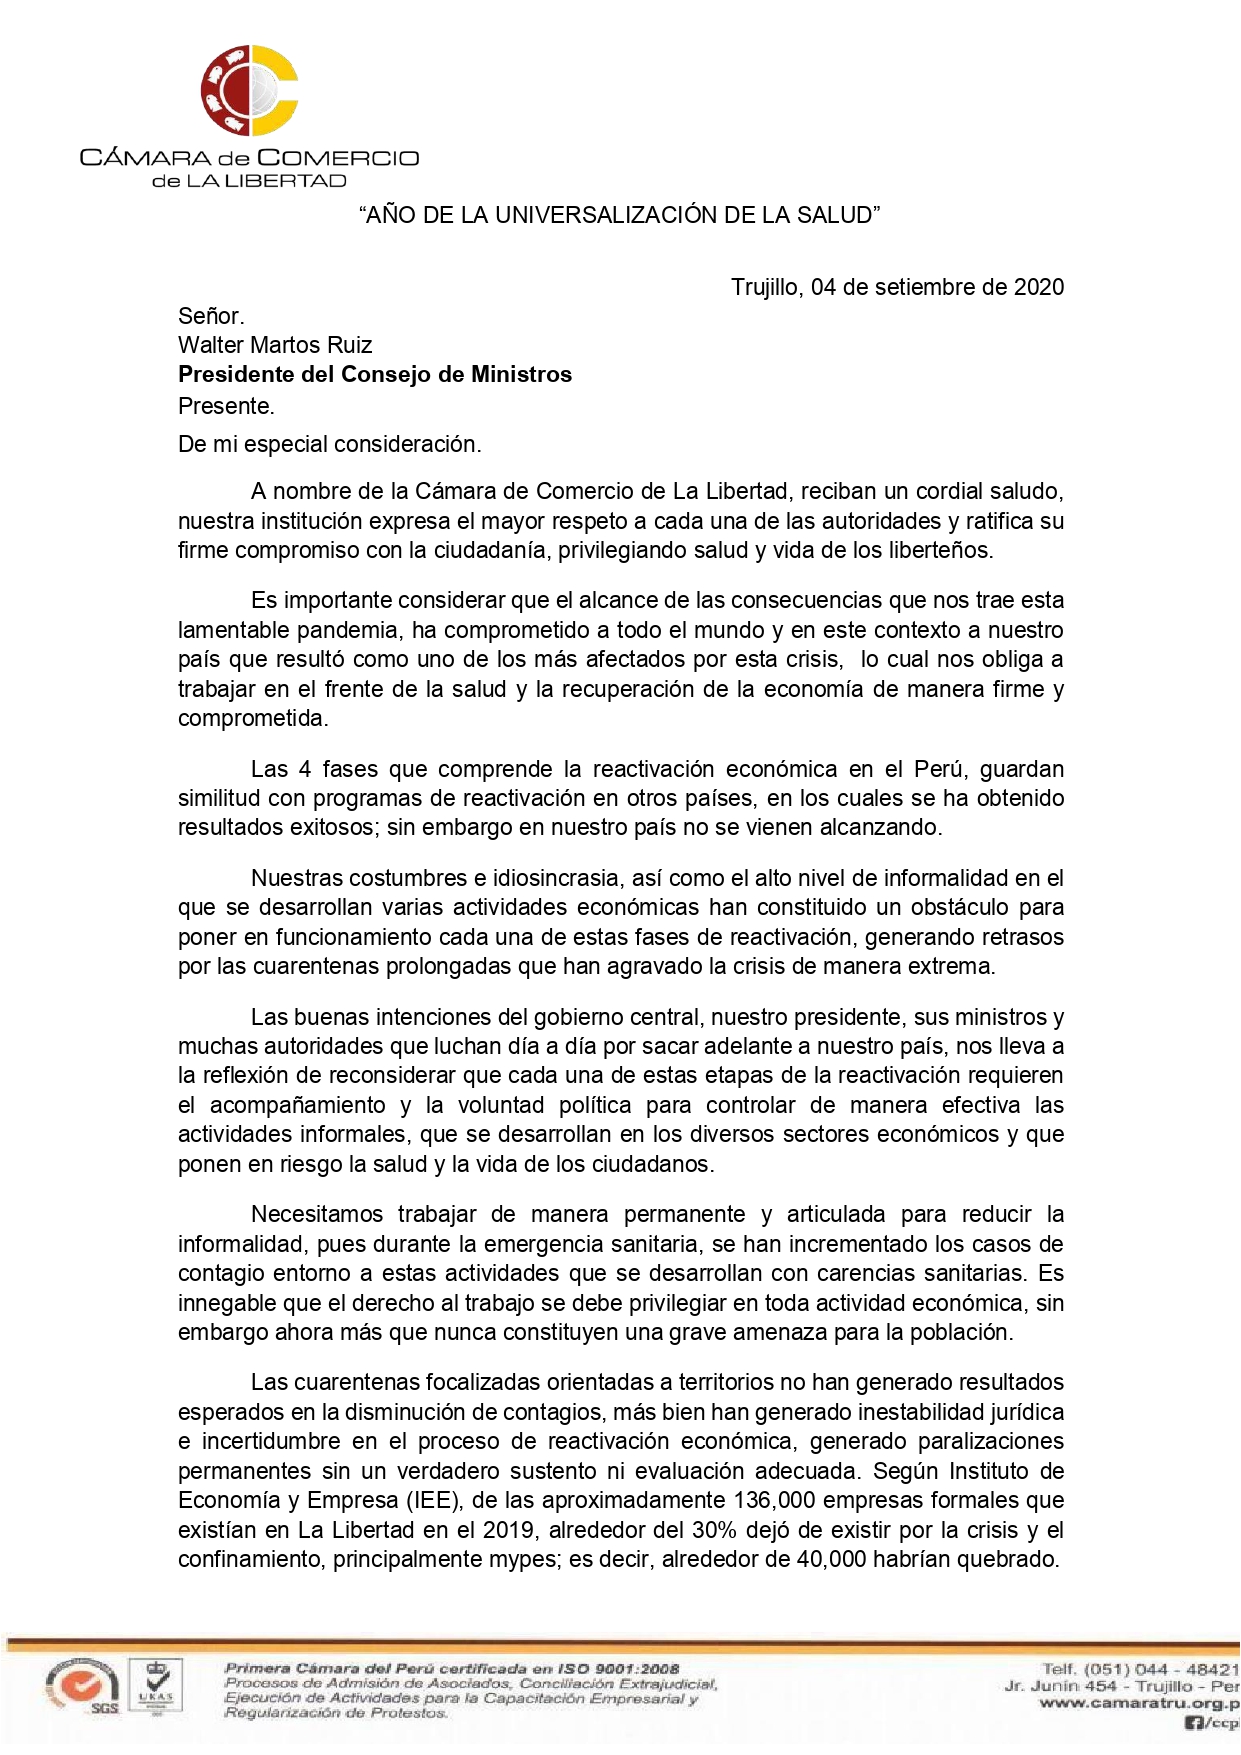 04.09.20 Carta PCM no cuarentena Trujillo page 0001